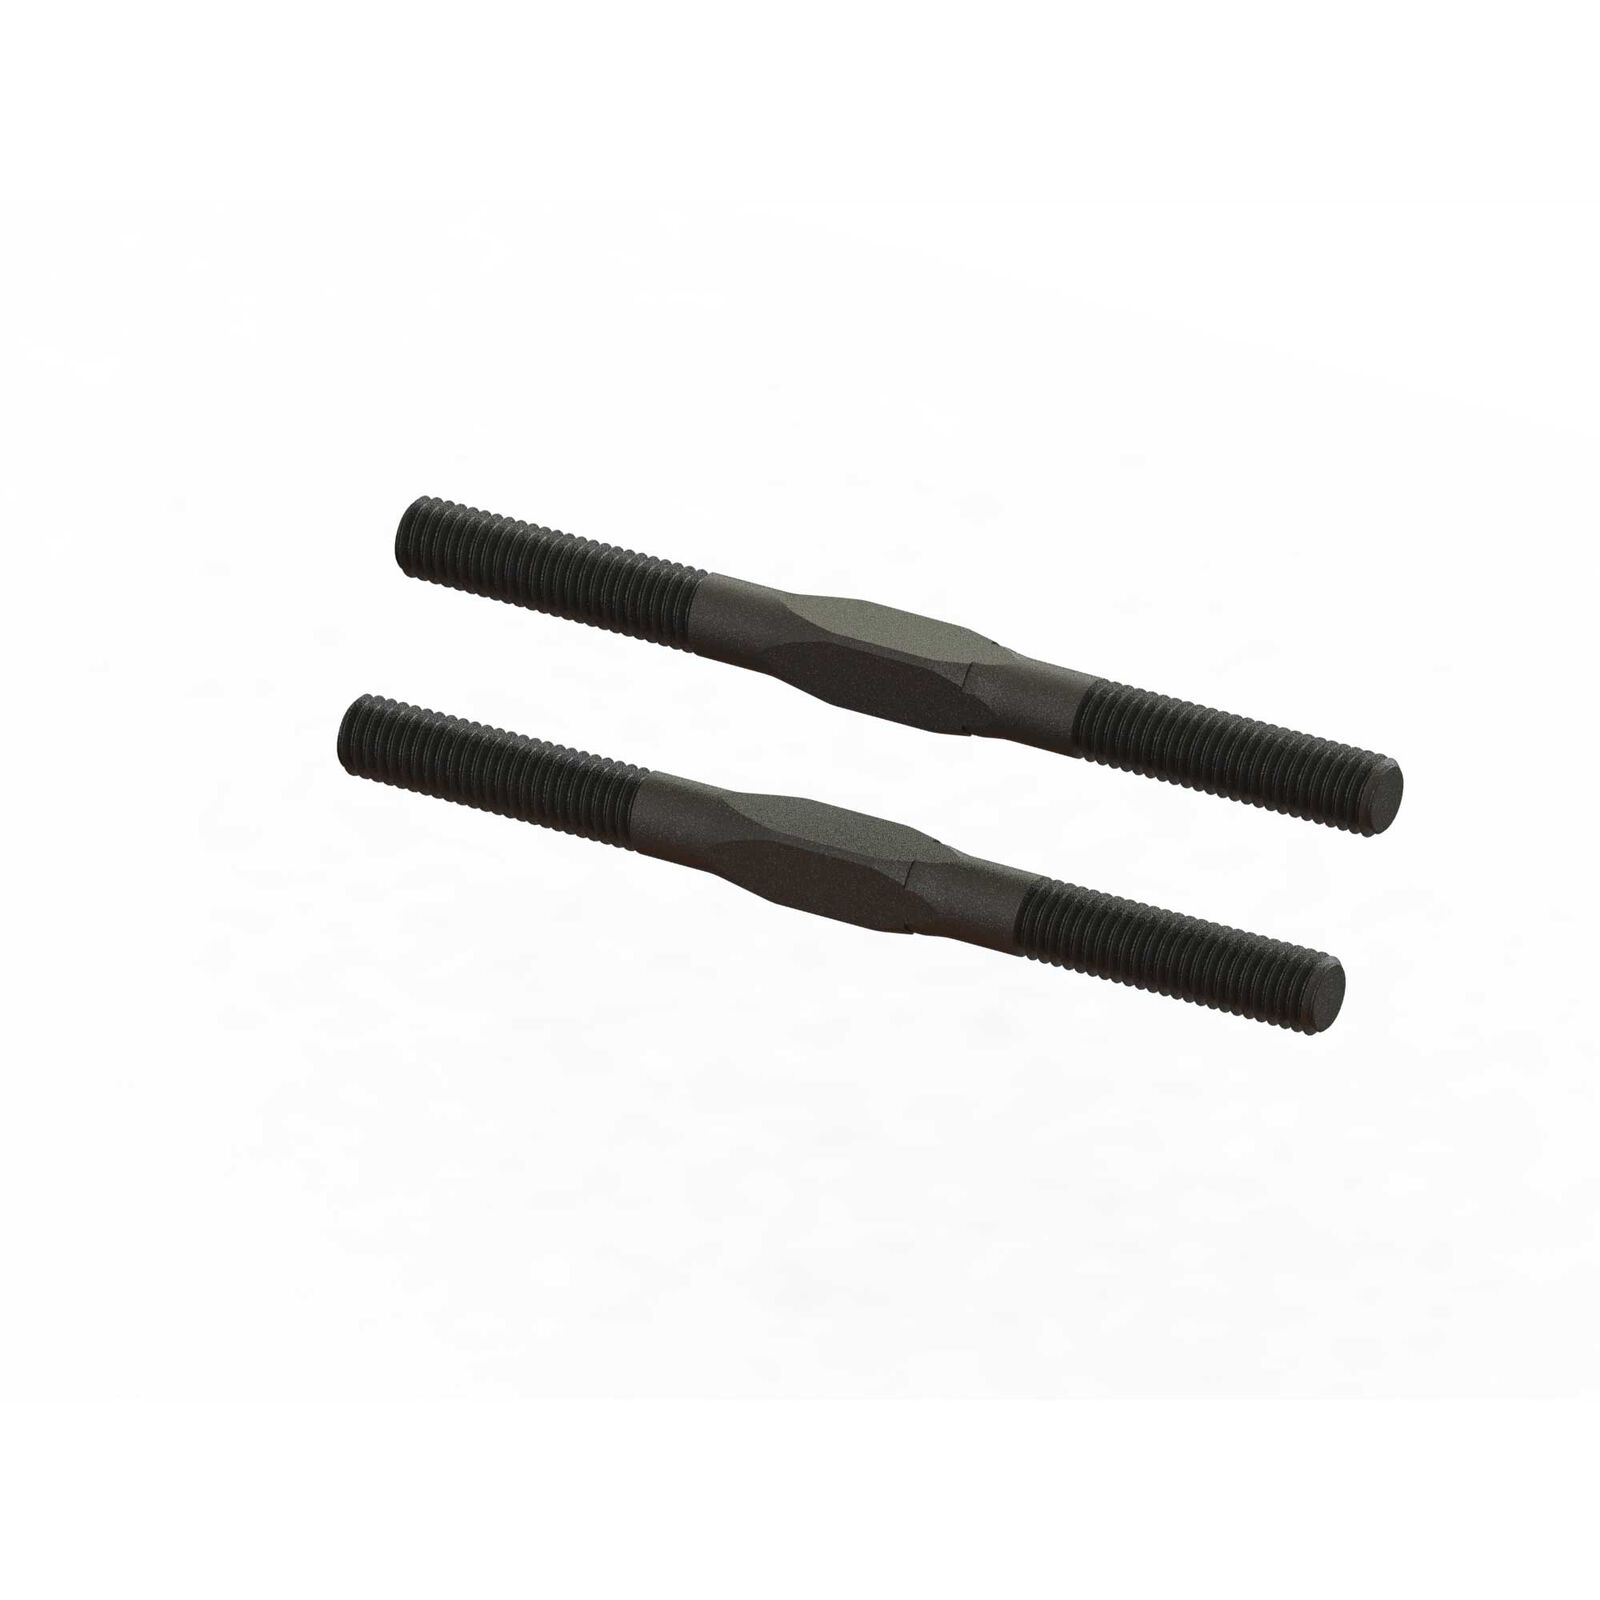 Steel Turnbuckle M5x65mm, Black (2)